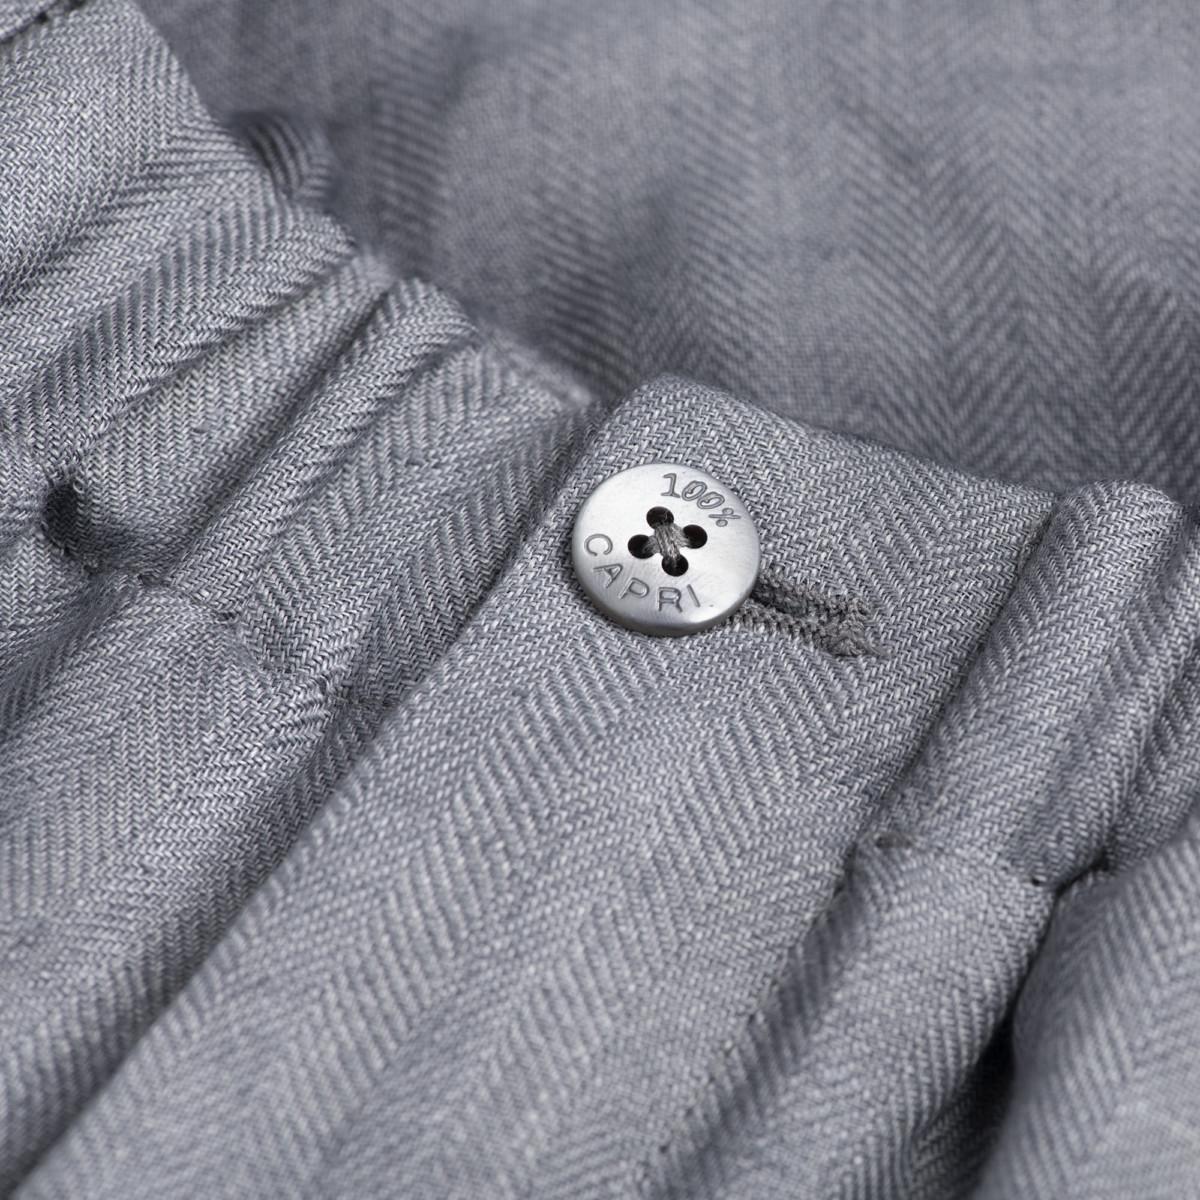 Pantalone Positano 100% Capri dark grey linen trouser detail